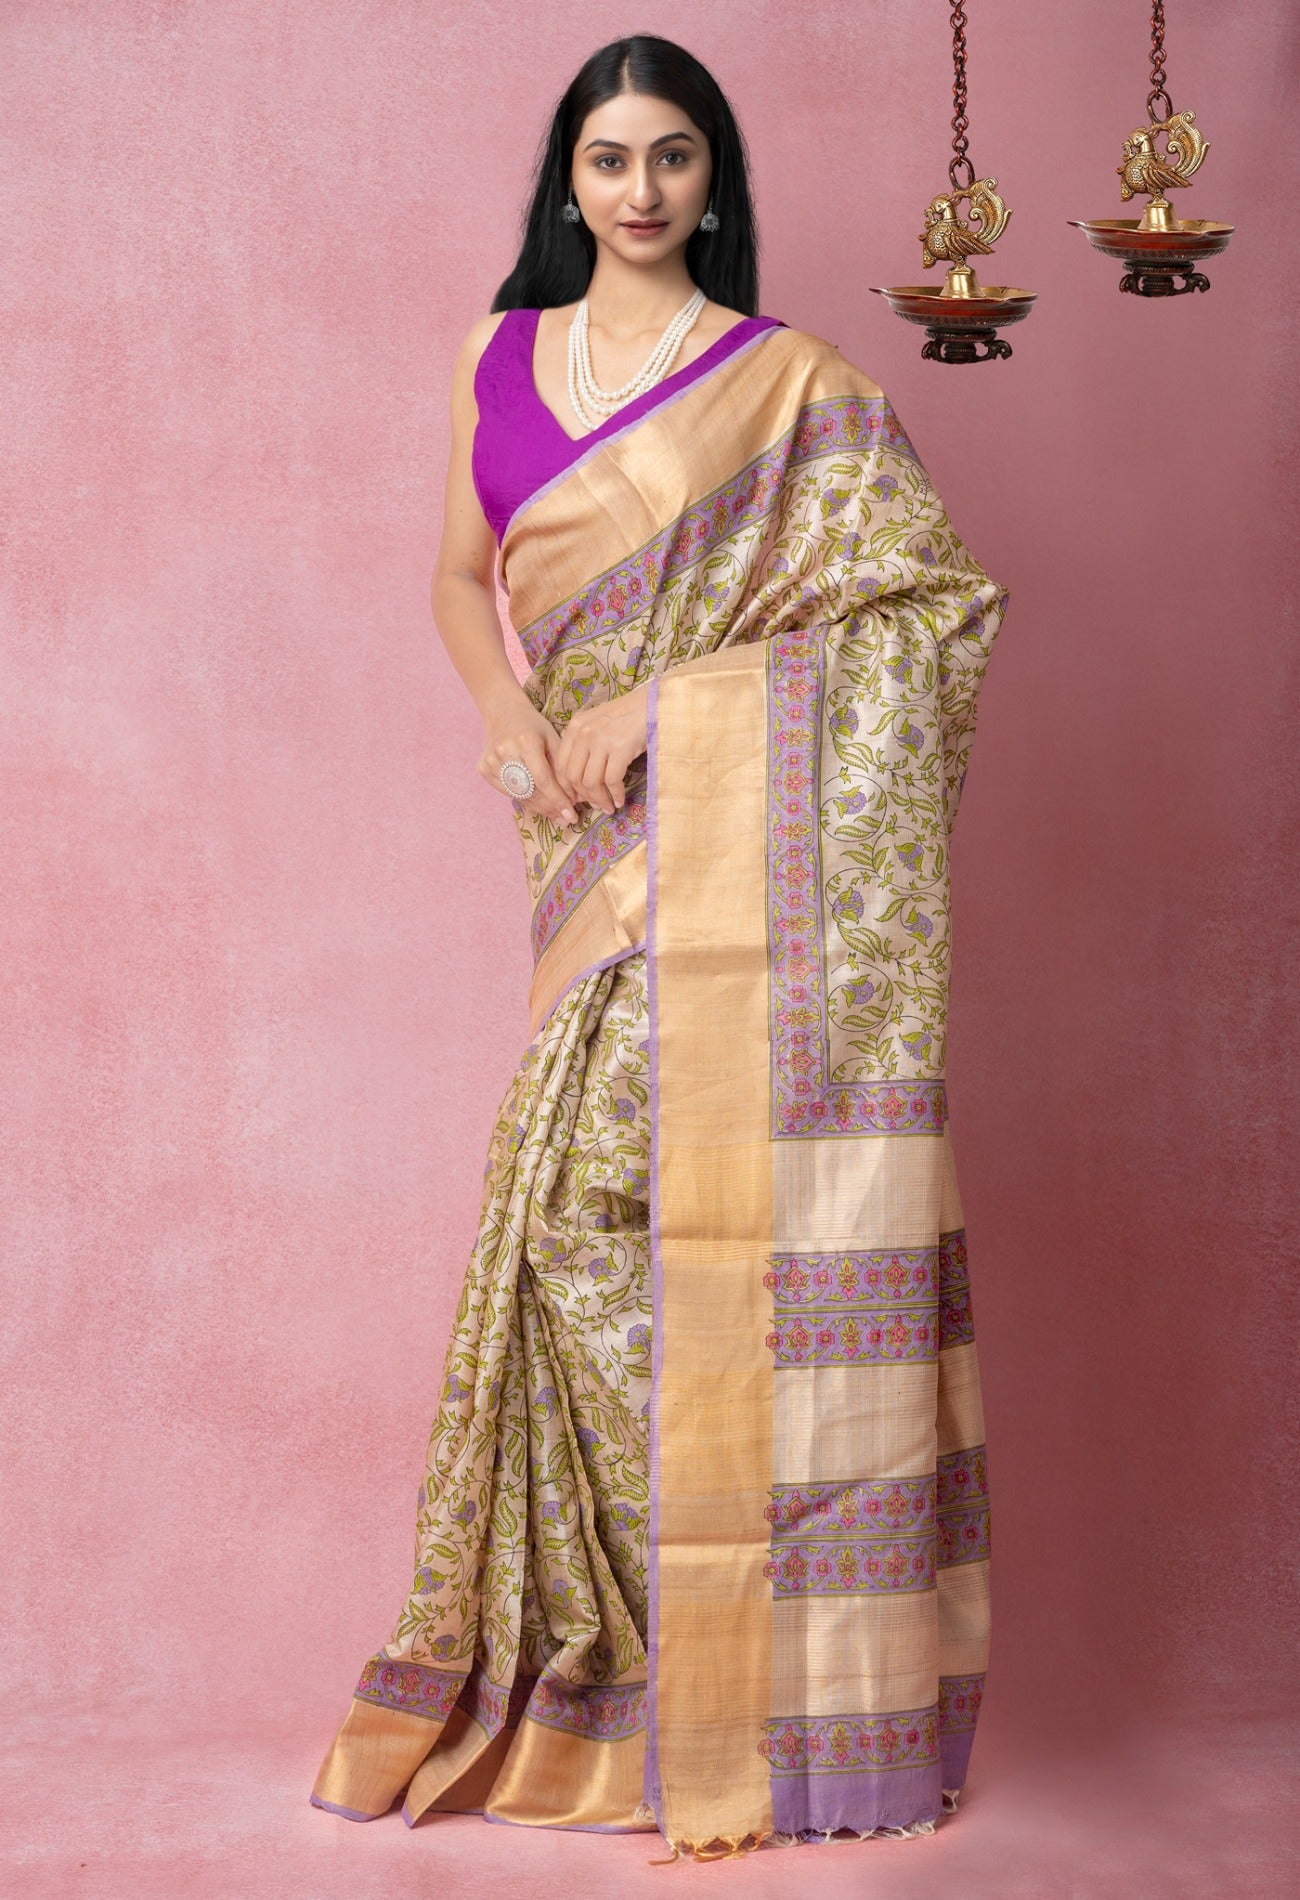 Brown Pure Handloom Ghicha Tussar  Silk Saree